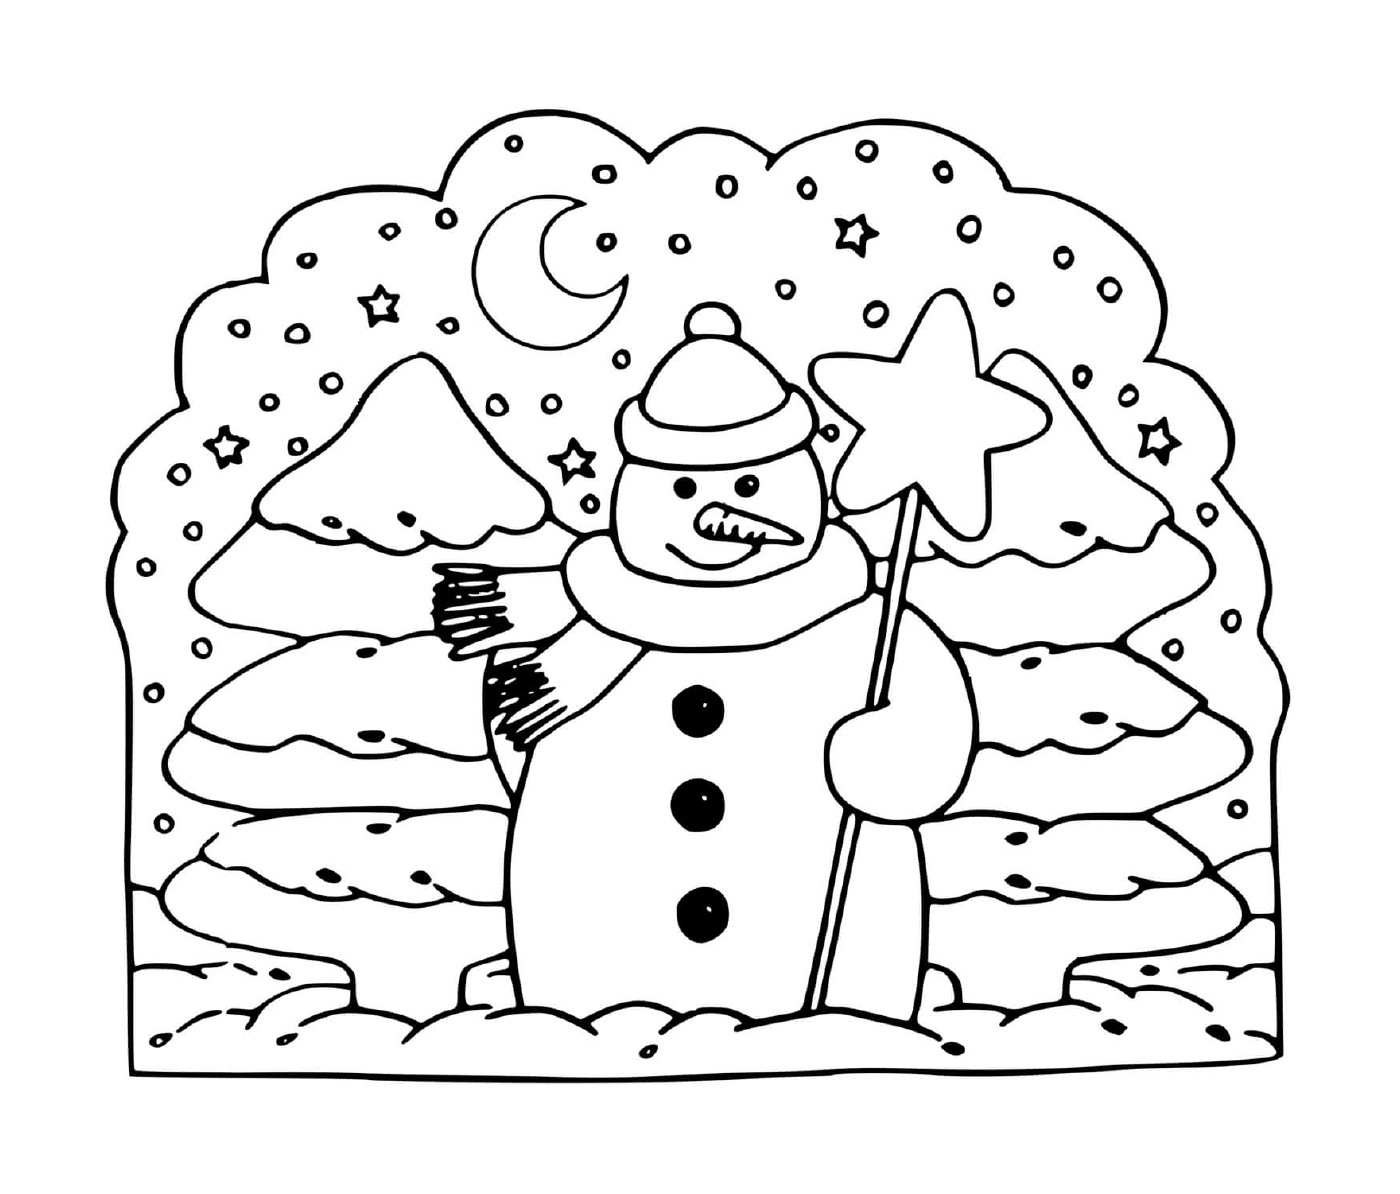  Snowman next to the tree 